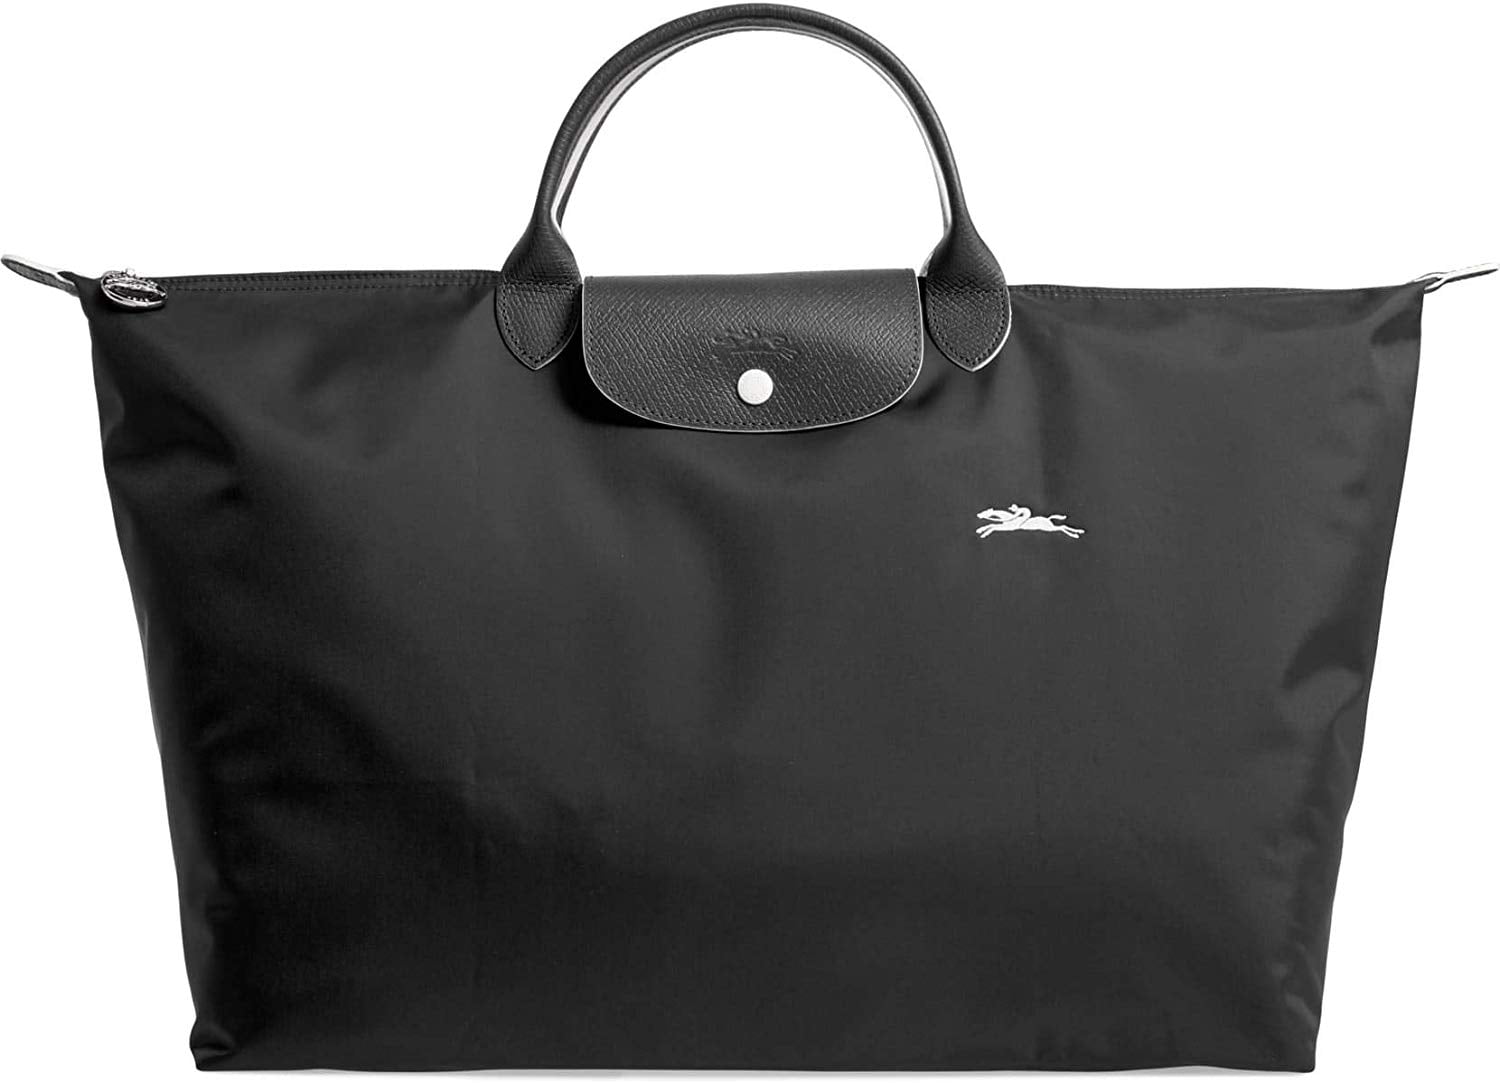 Longchamp - Longchamp 'Large Le Pliage' Nylon Club Tote Bag, Black ...